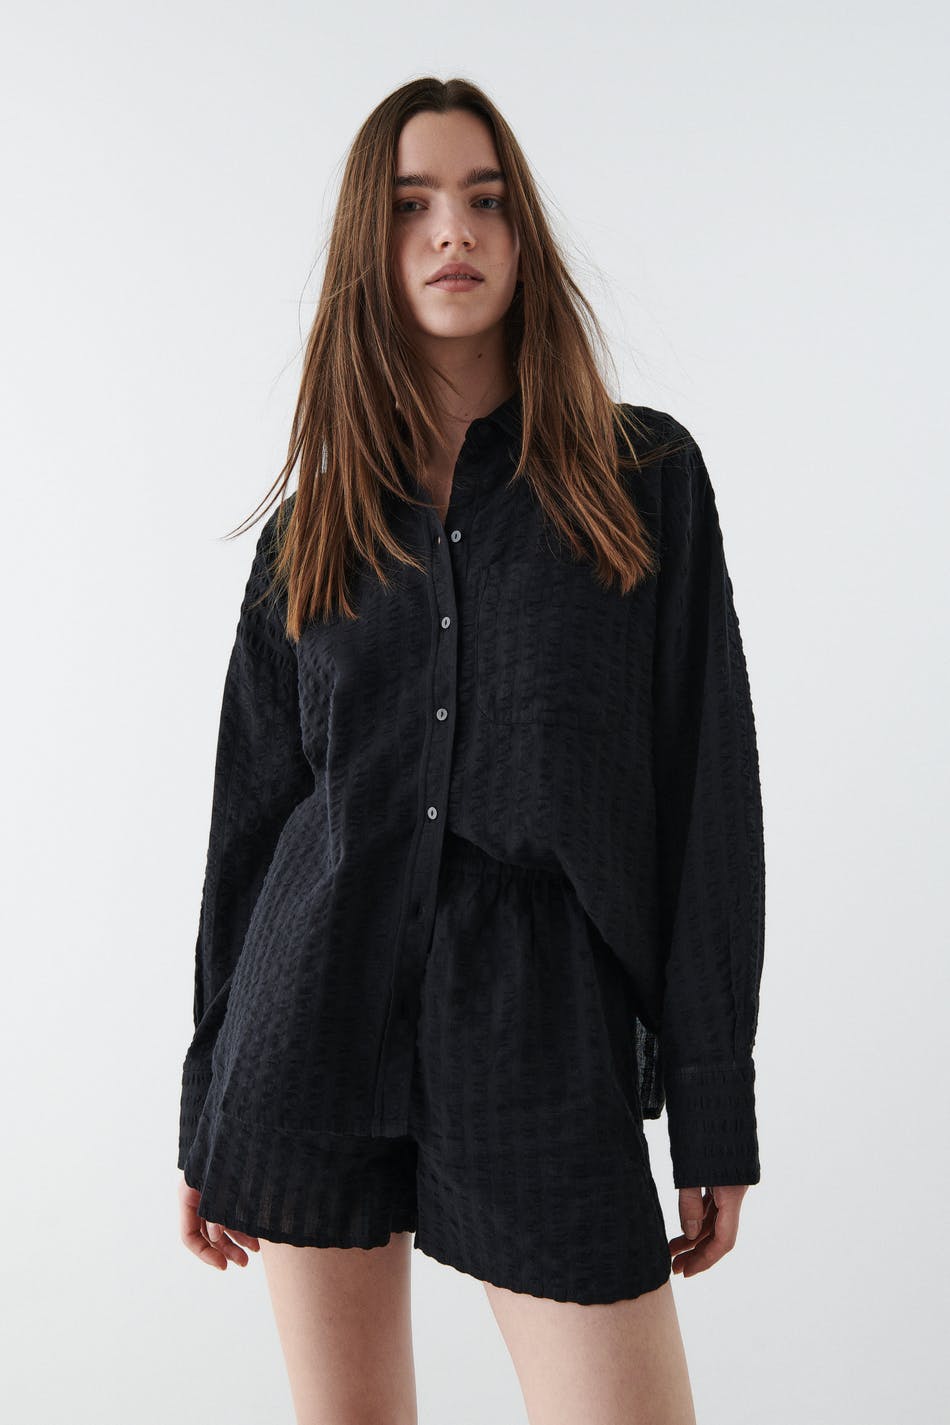 Gina Tricot Amanda pyjamas shorts XL  Black (9000)